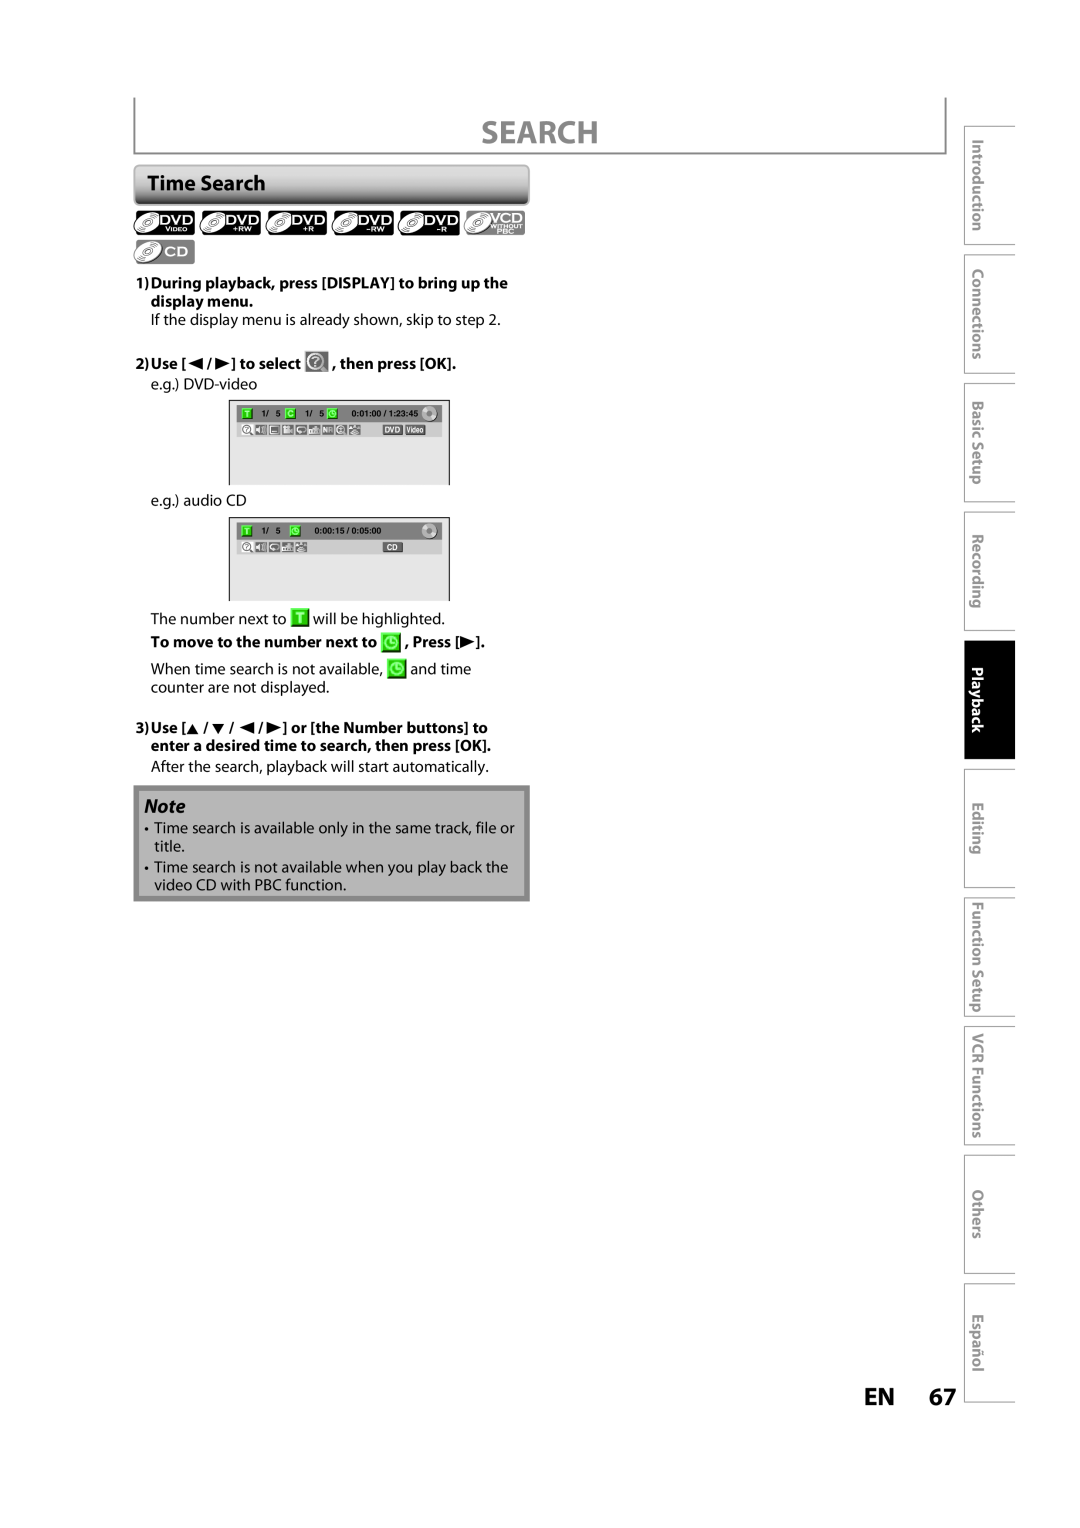 FUNAI ZV457MG9 A owner manual Time Search, During playback, press DISPLAY to bring up the display menu, Español 